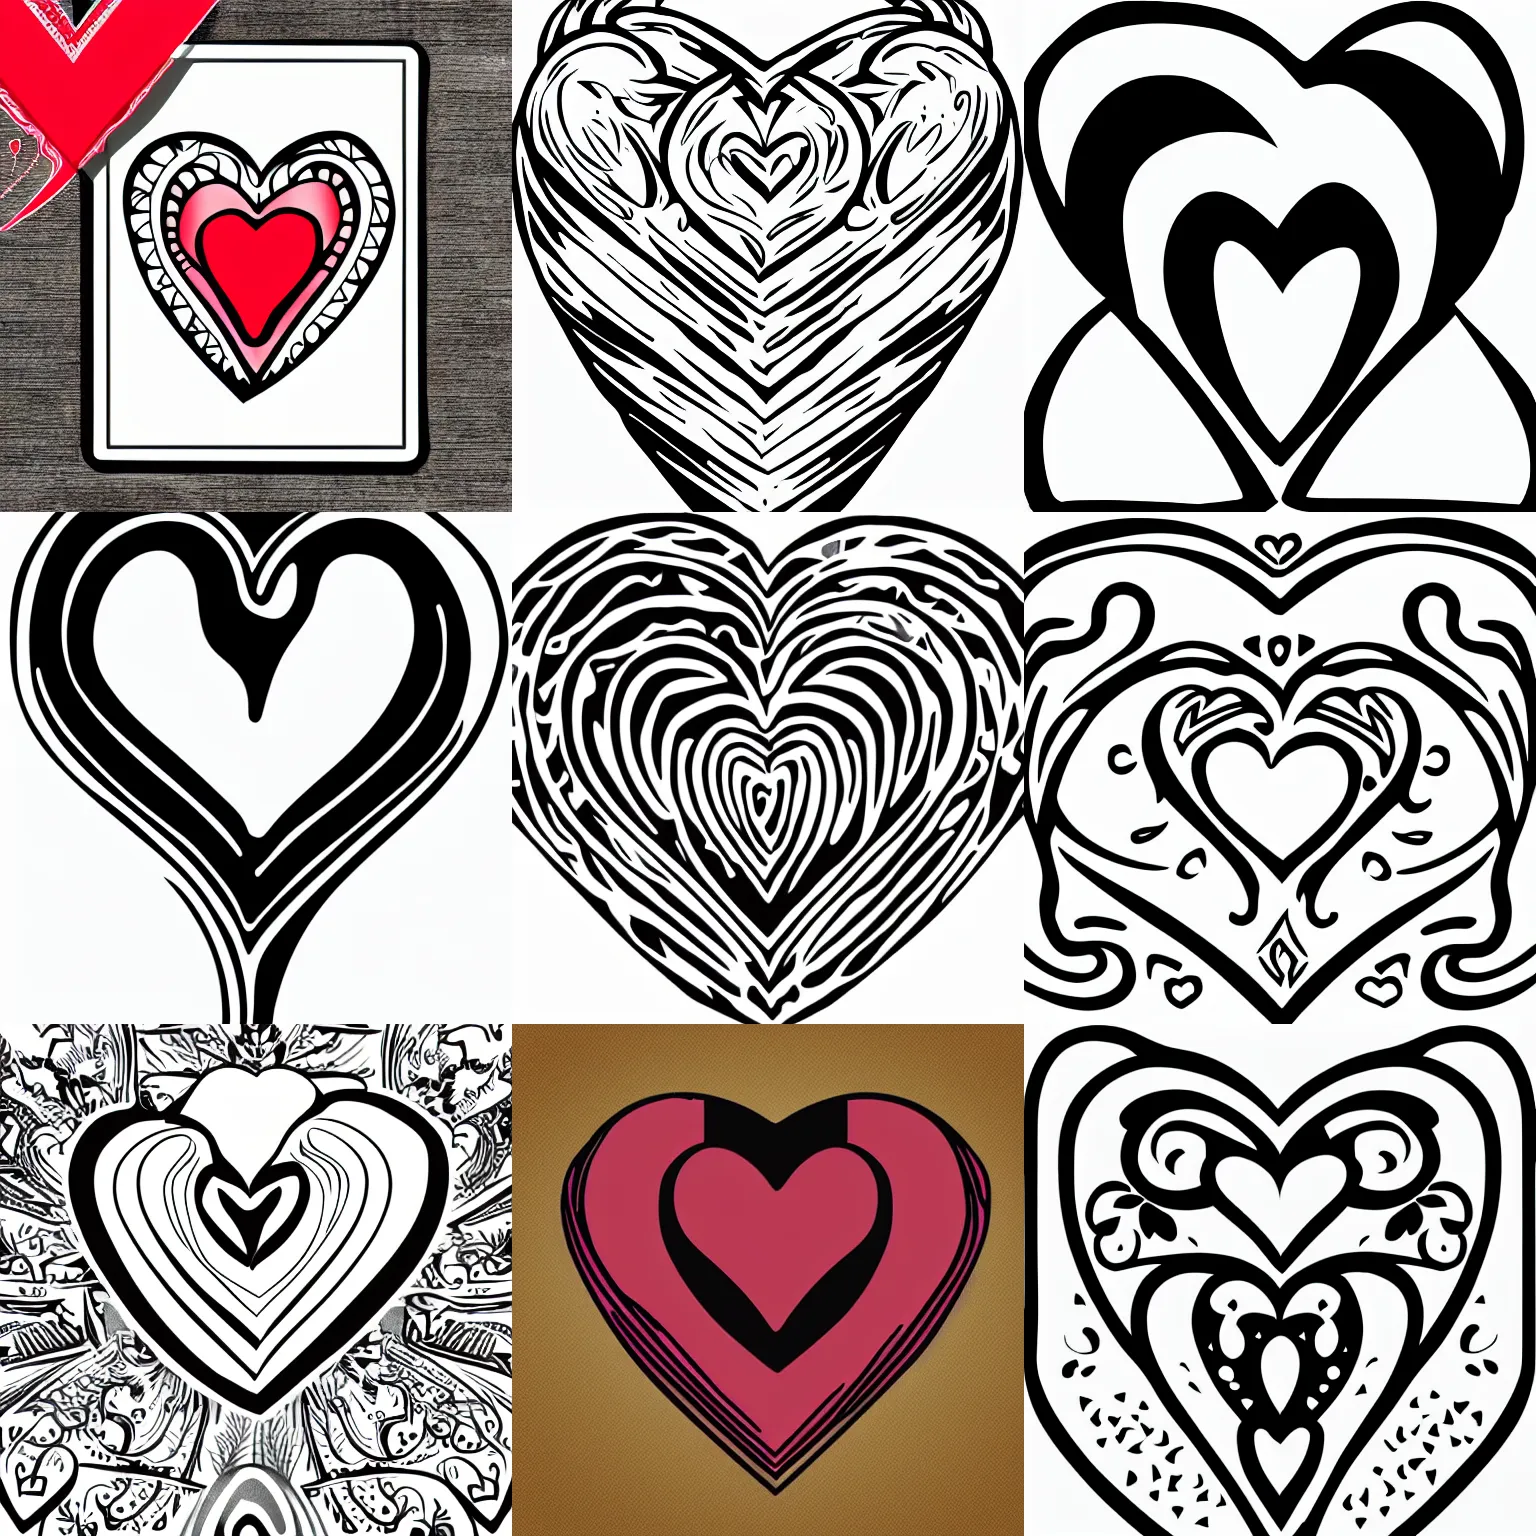 S + D in heart shape couples tattoo🖤 | Instagram